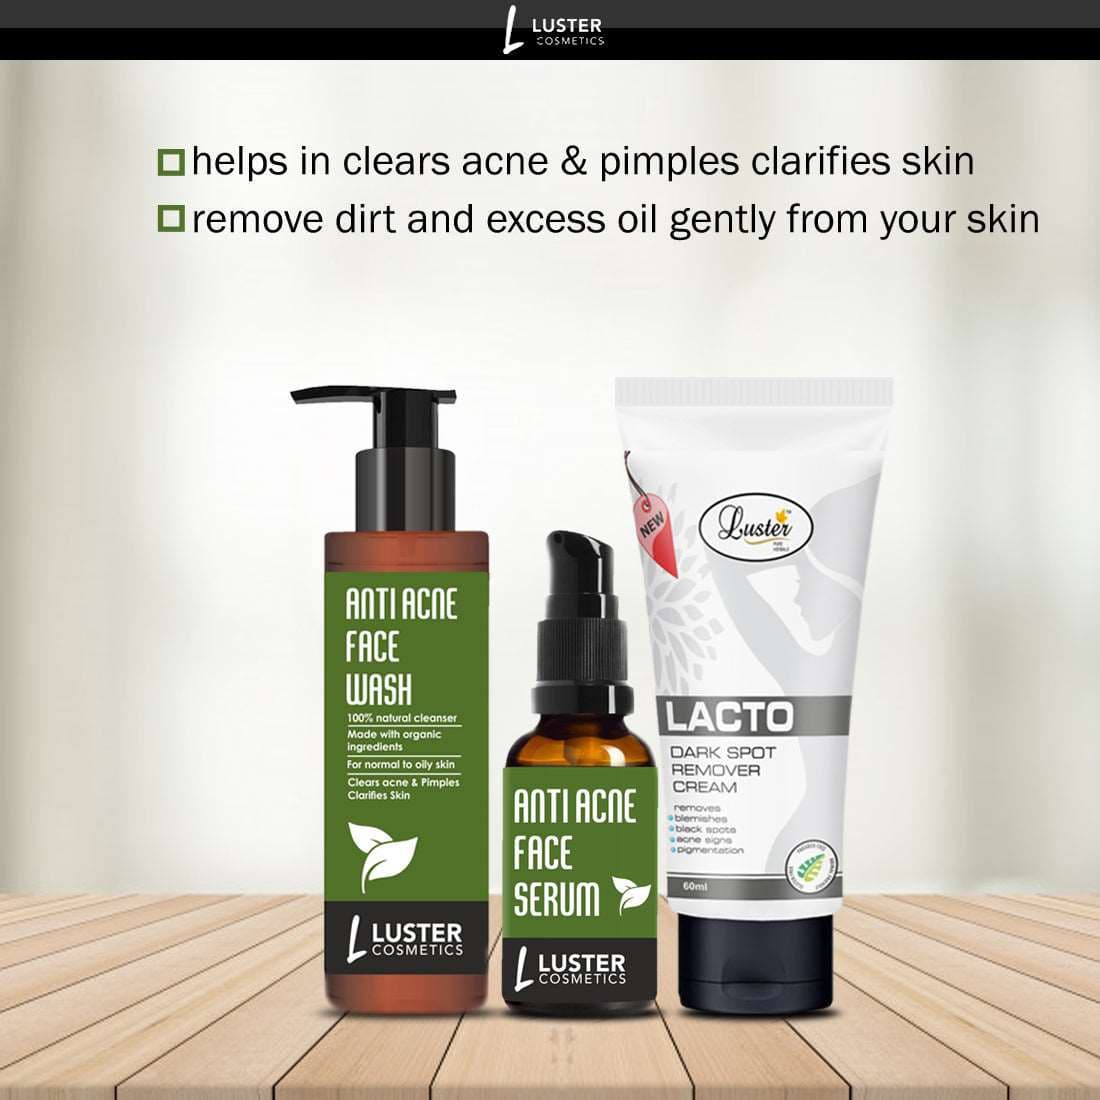 Luster Cosmetics Anti Acne Face wash , Face Serum & Lacto Dark Spot Remover Cream (Pack of 3-205ml)